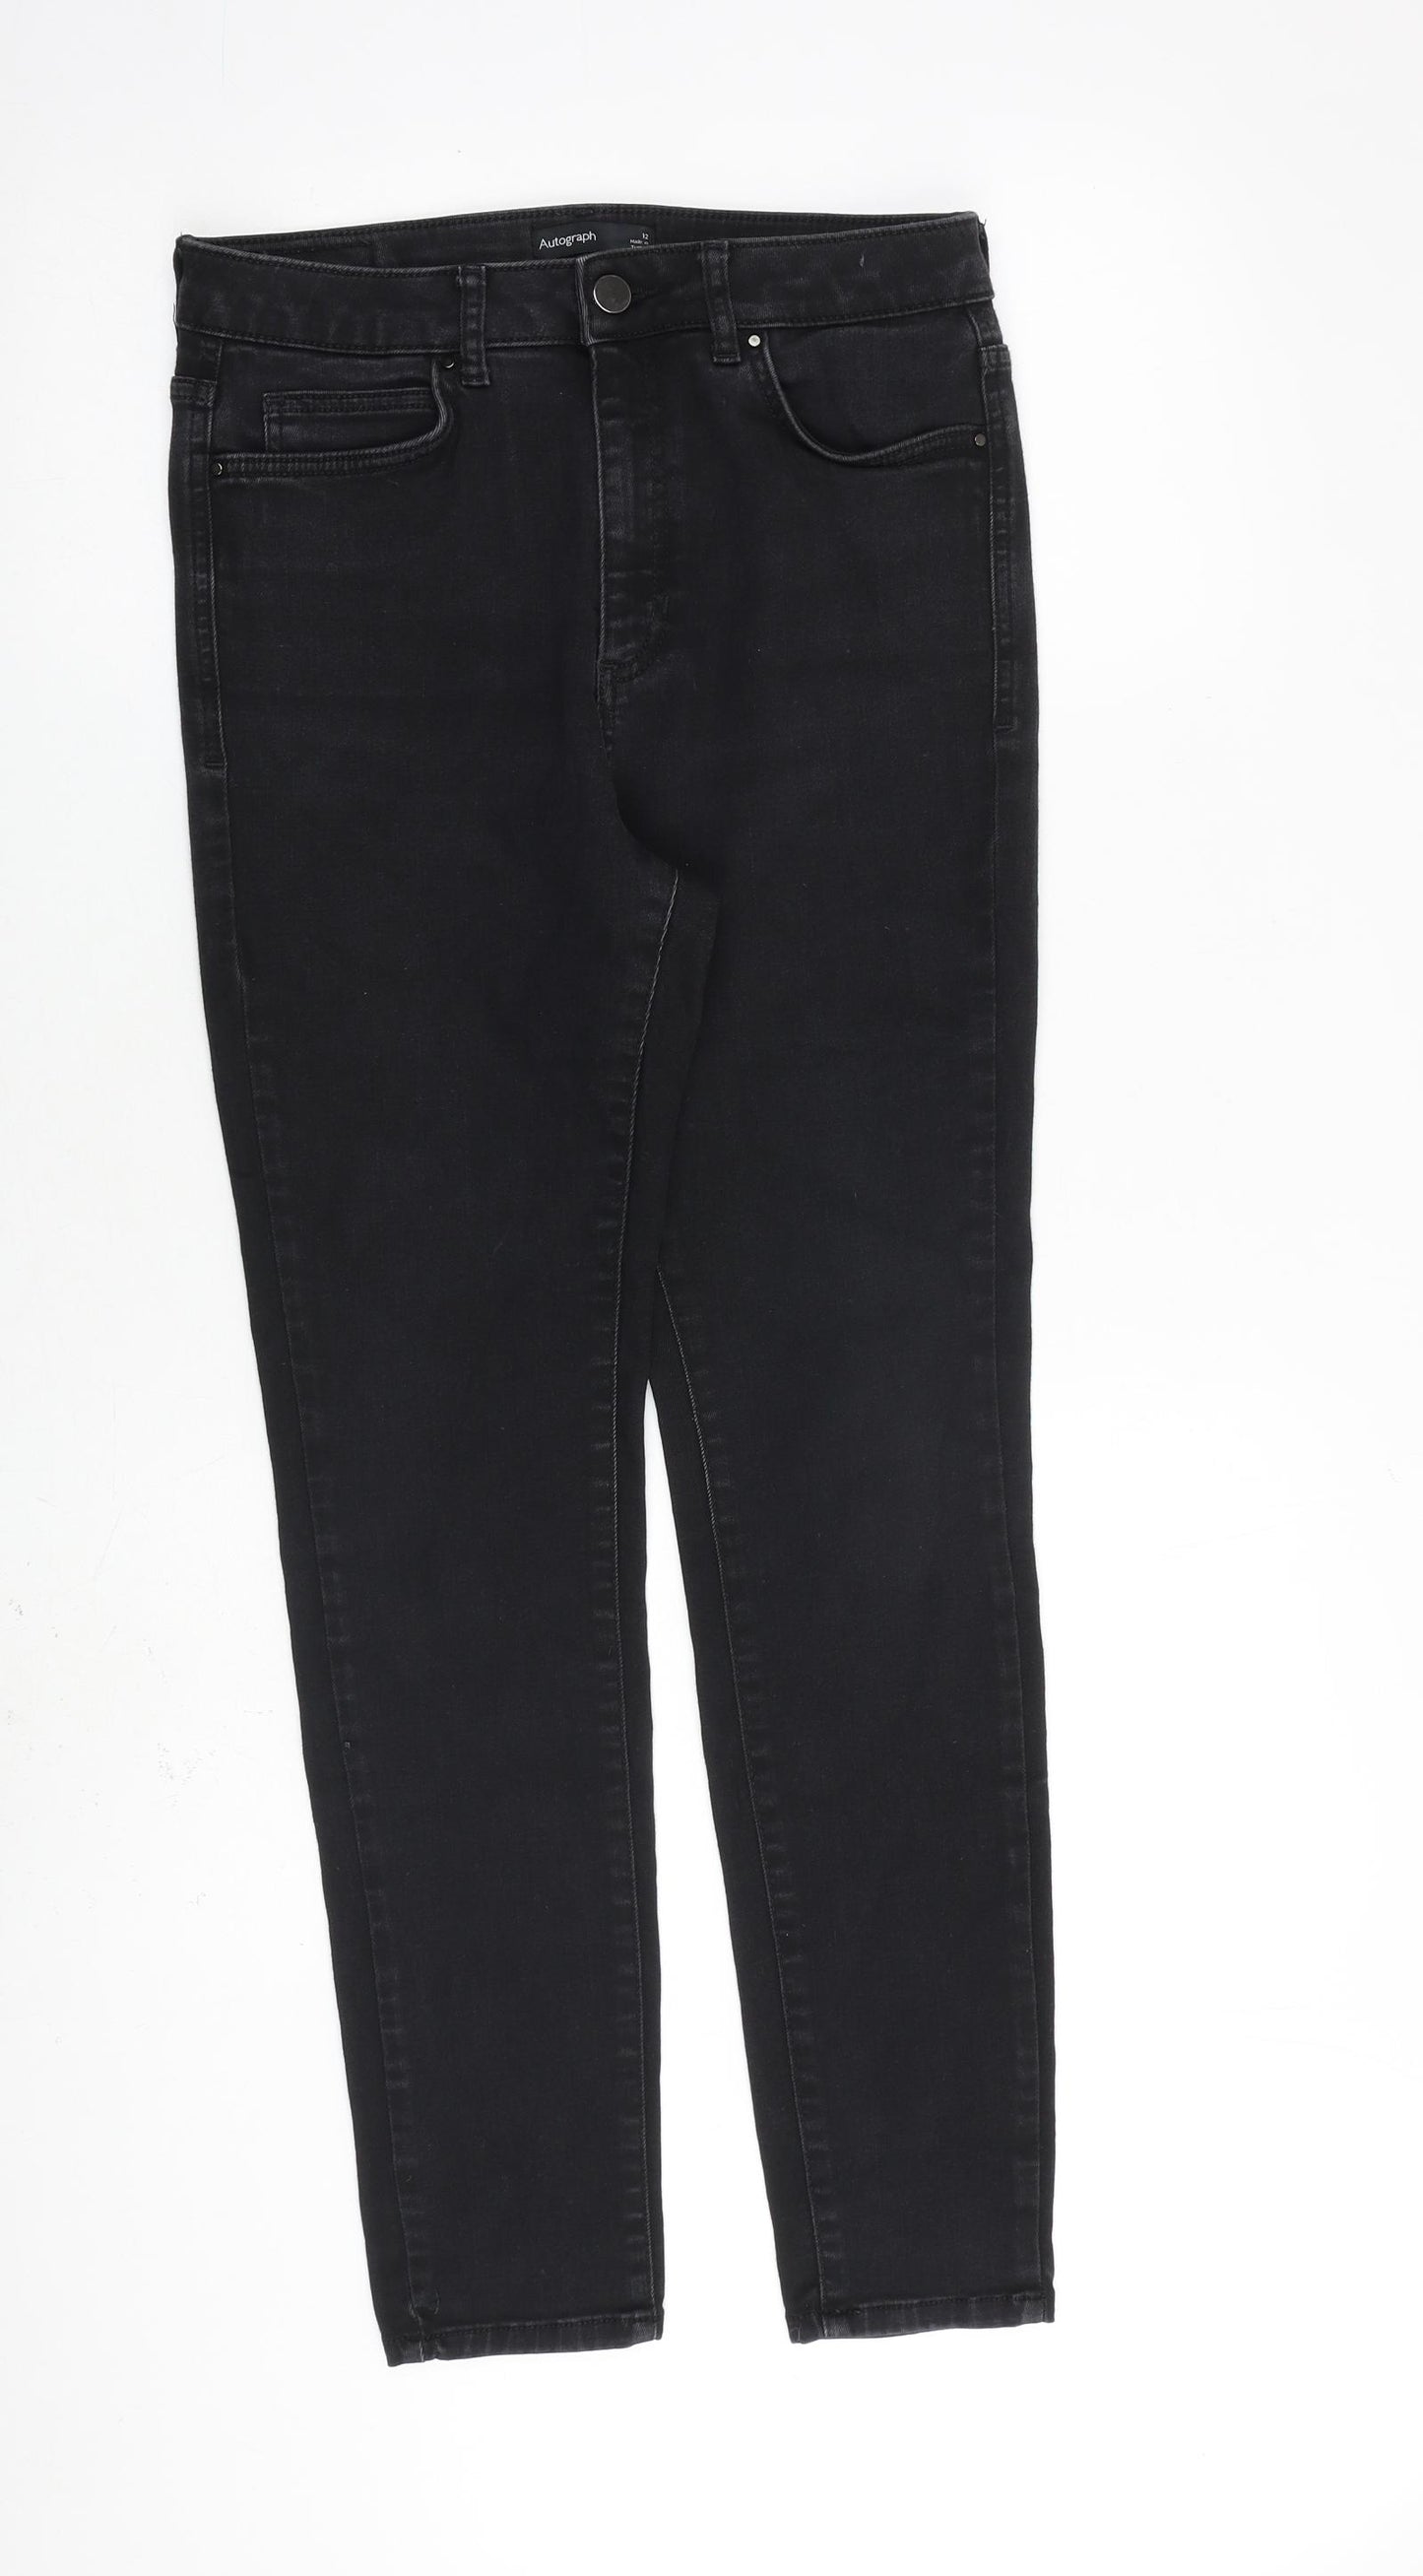 Autograph Womens Black Cotton Skinny Jeans Size 12 L29 in Regular Zip